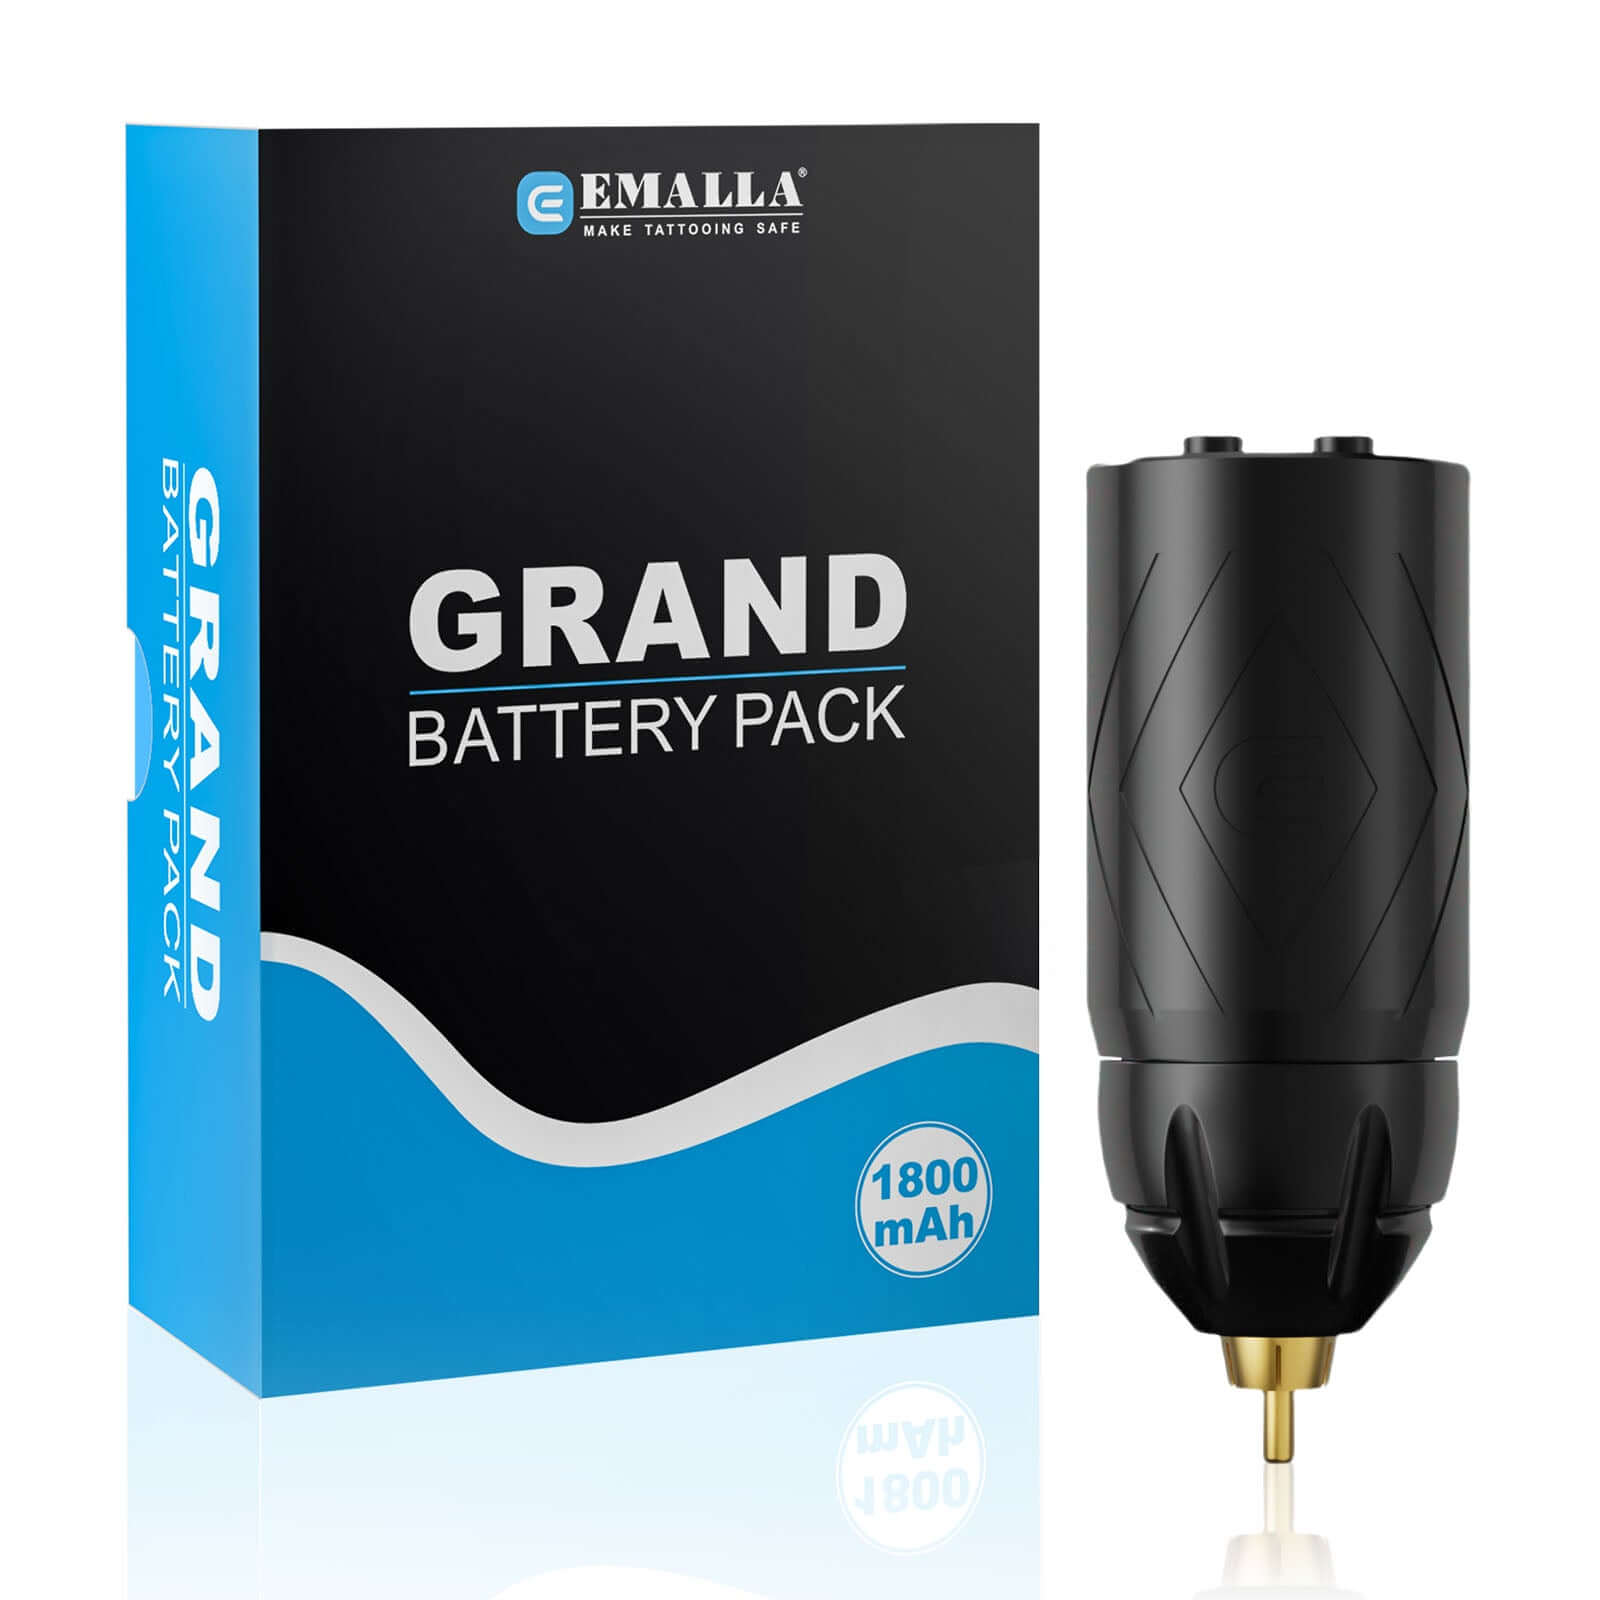 EMALLA GRAND Wireless Tattoo Battery Power Supply RCA Connect 1800mAh (Black)